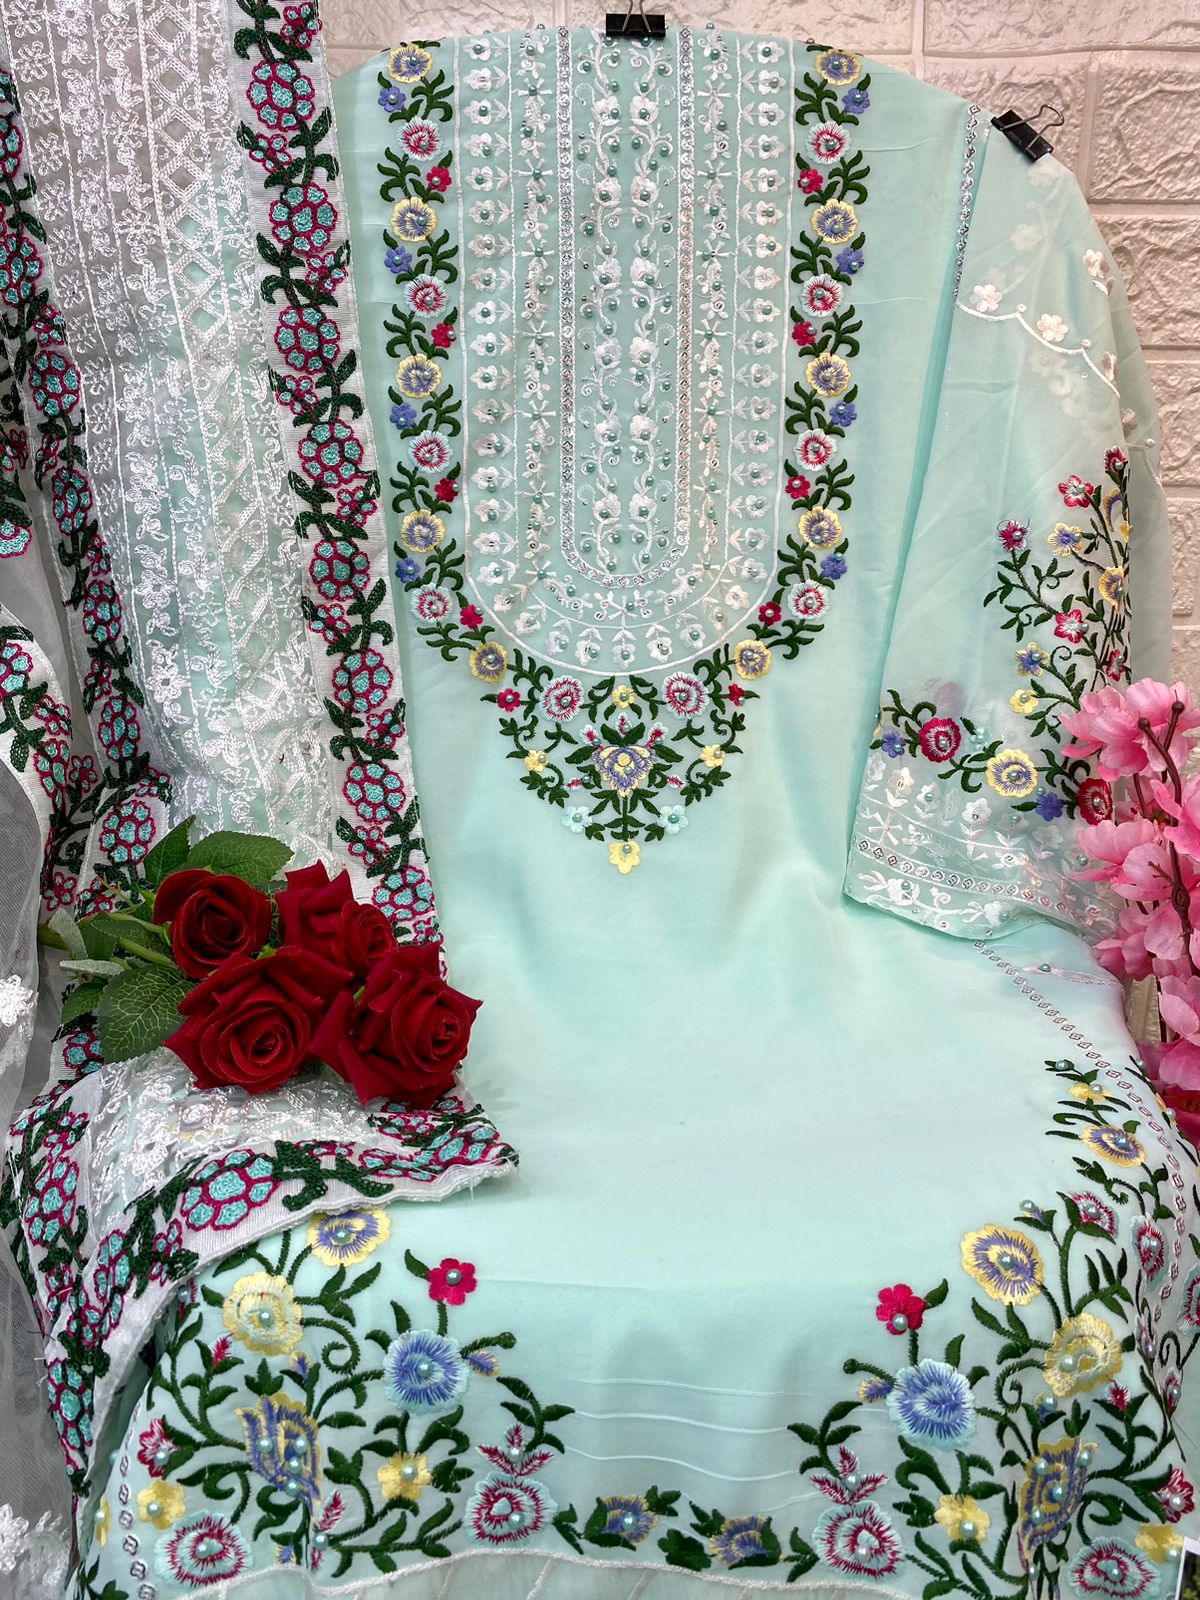 zaha zainab chottani d no 10057 e f g georgette regal look salwar suit catalog